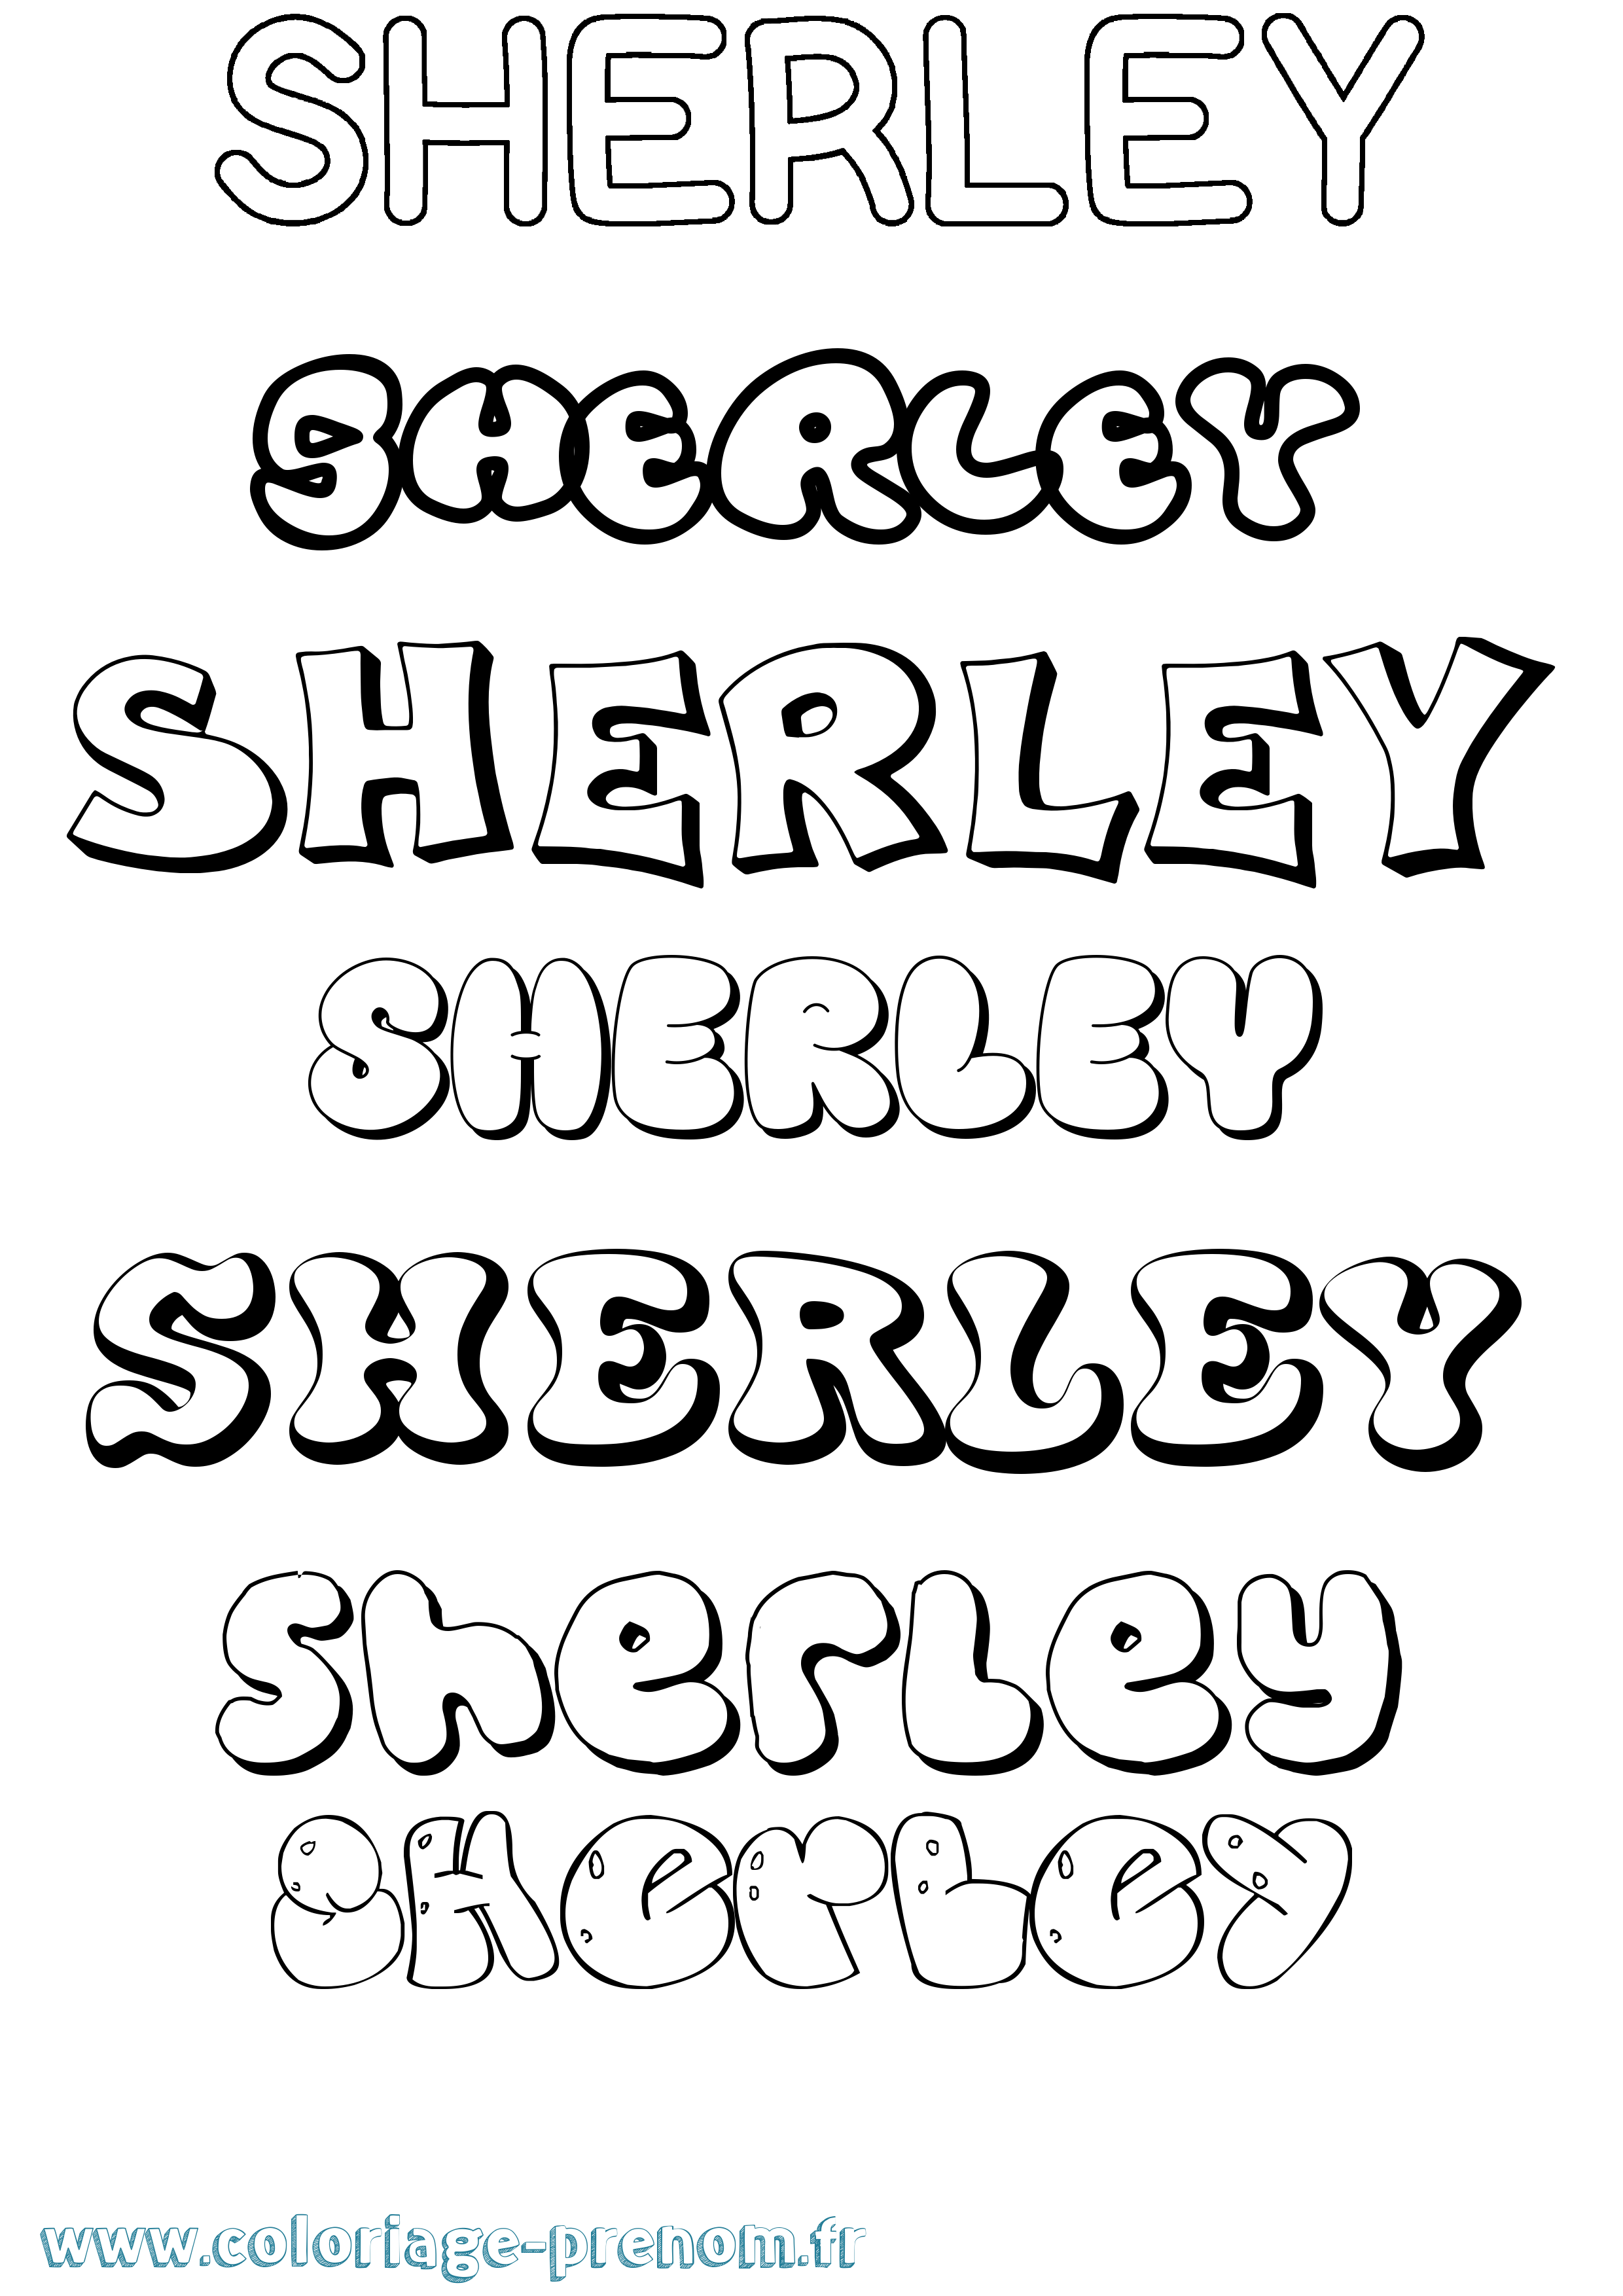 Coloriage prénom Sherley Bubble